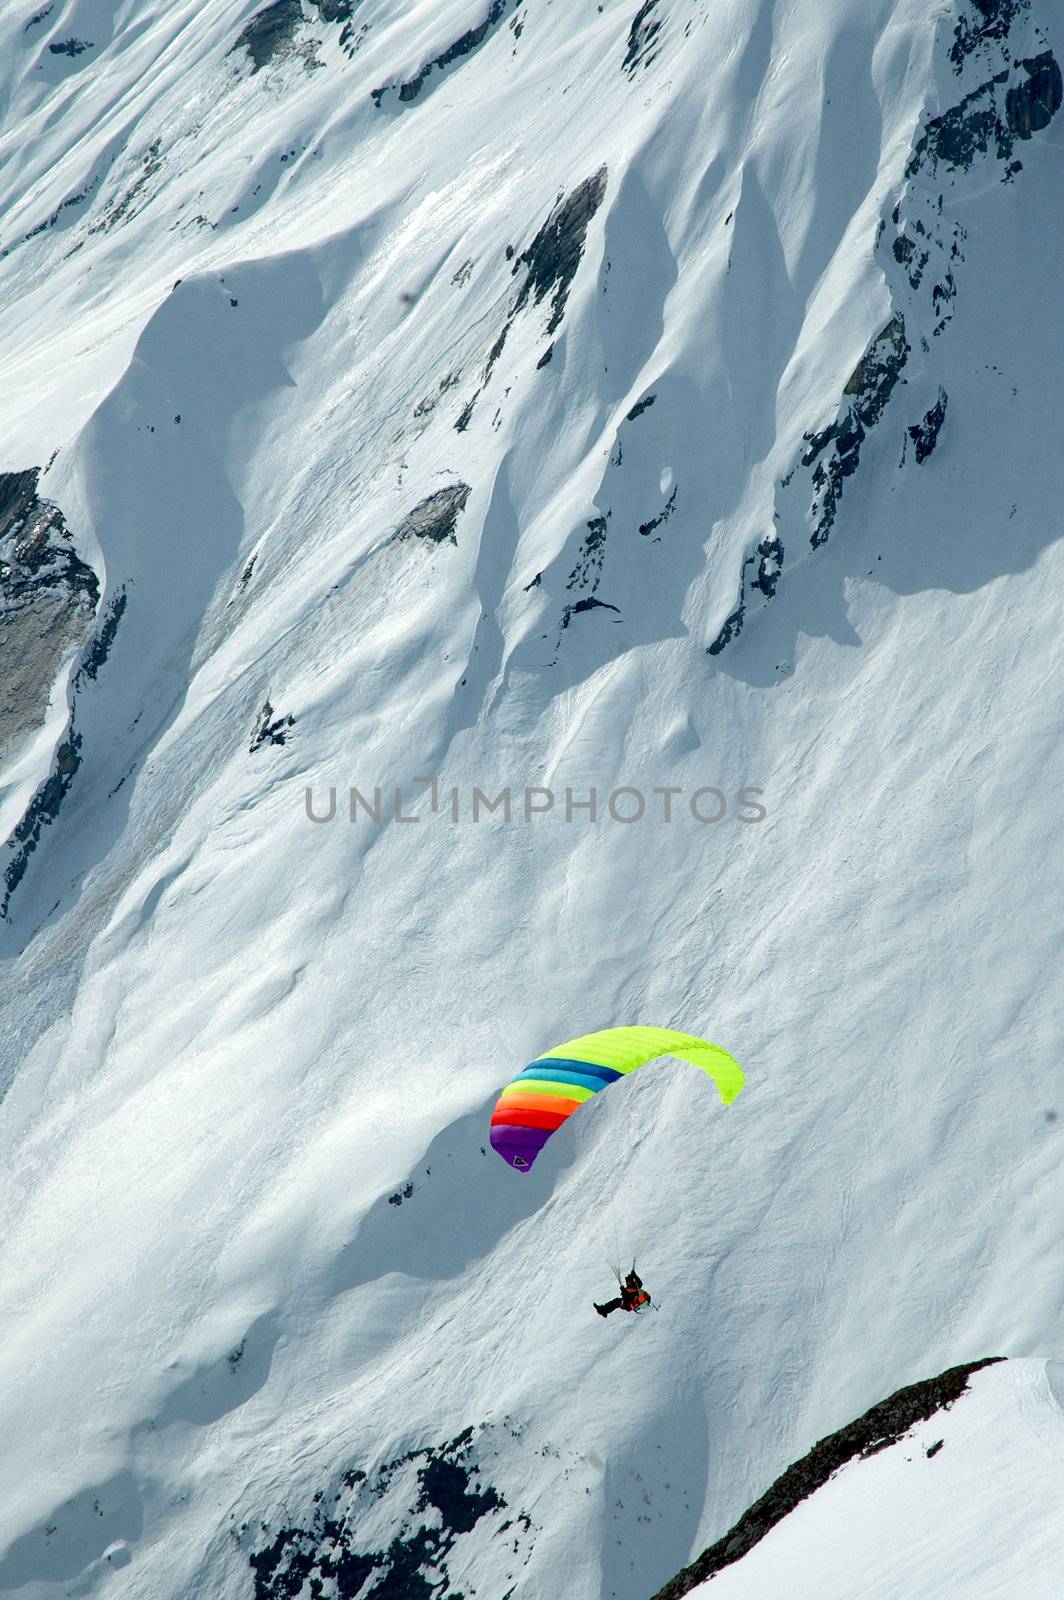 Sion, Switzerland - Paraplane in the Alpine mountains